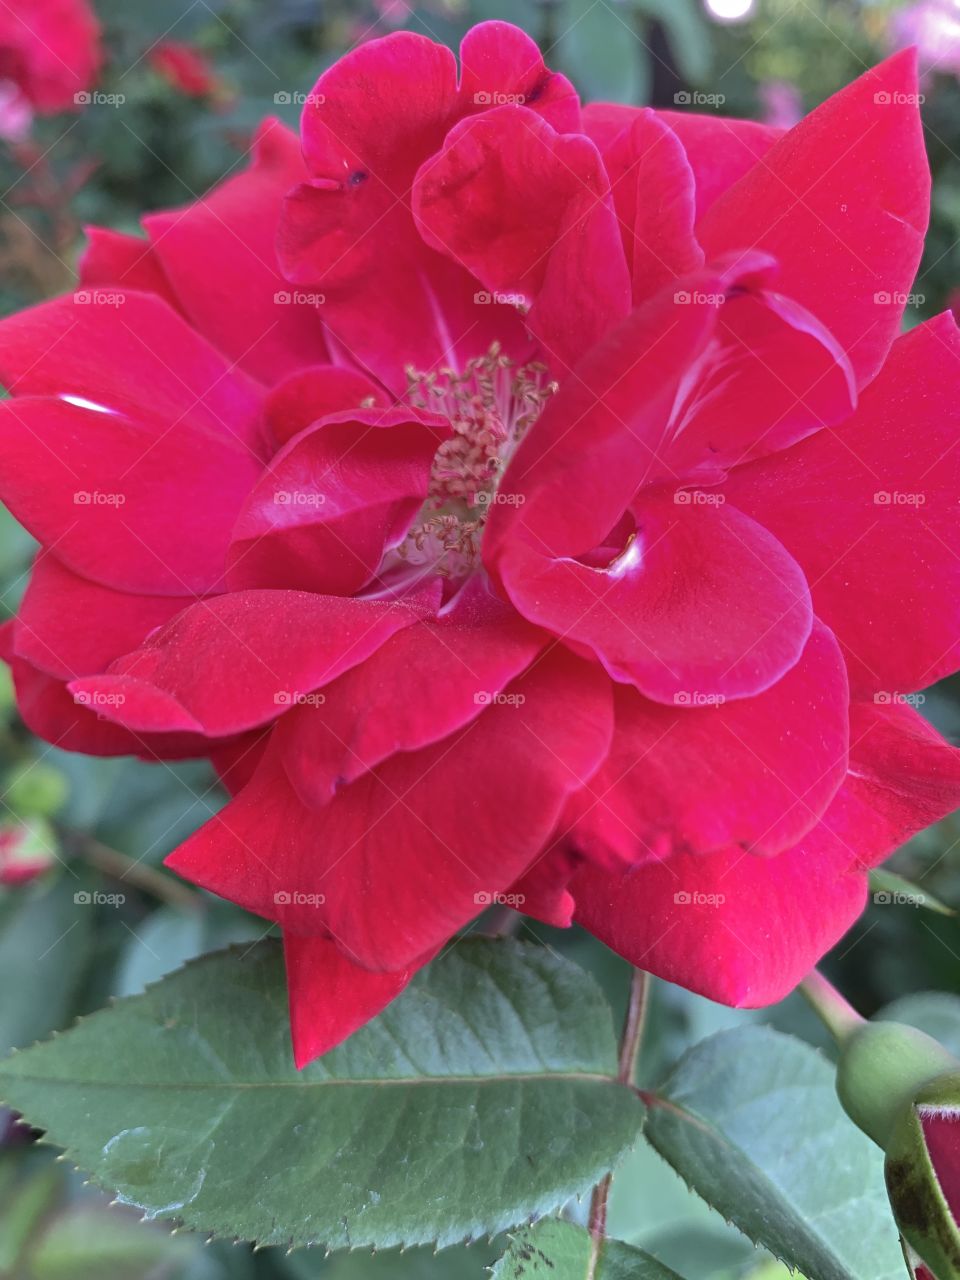 Closeup of a rose in full bloom